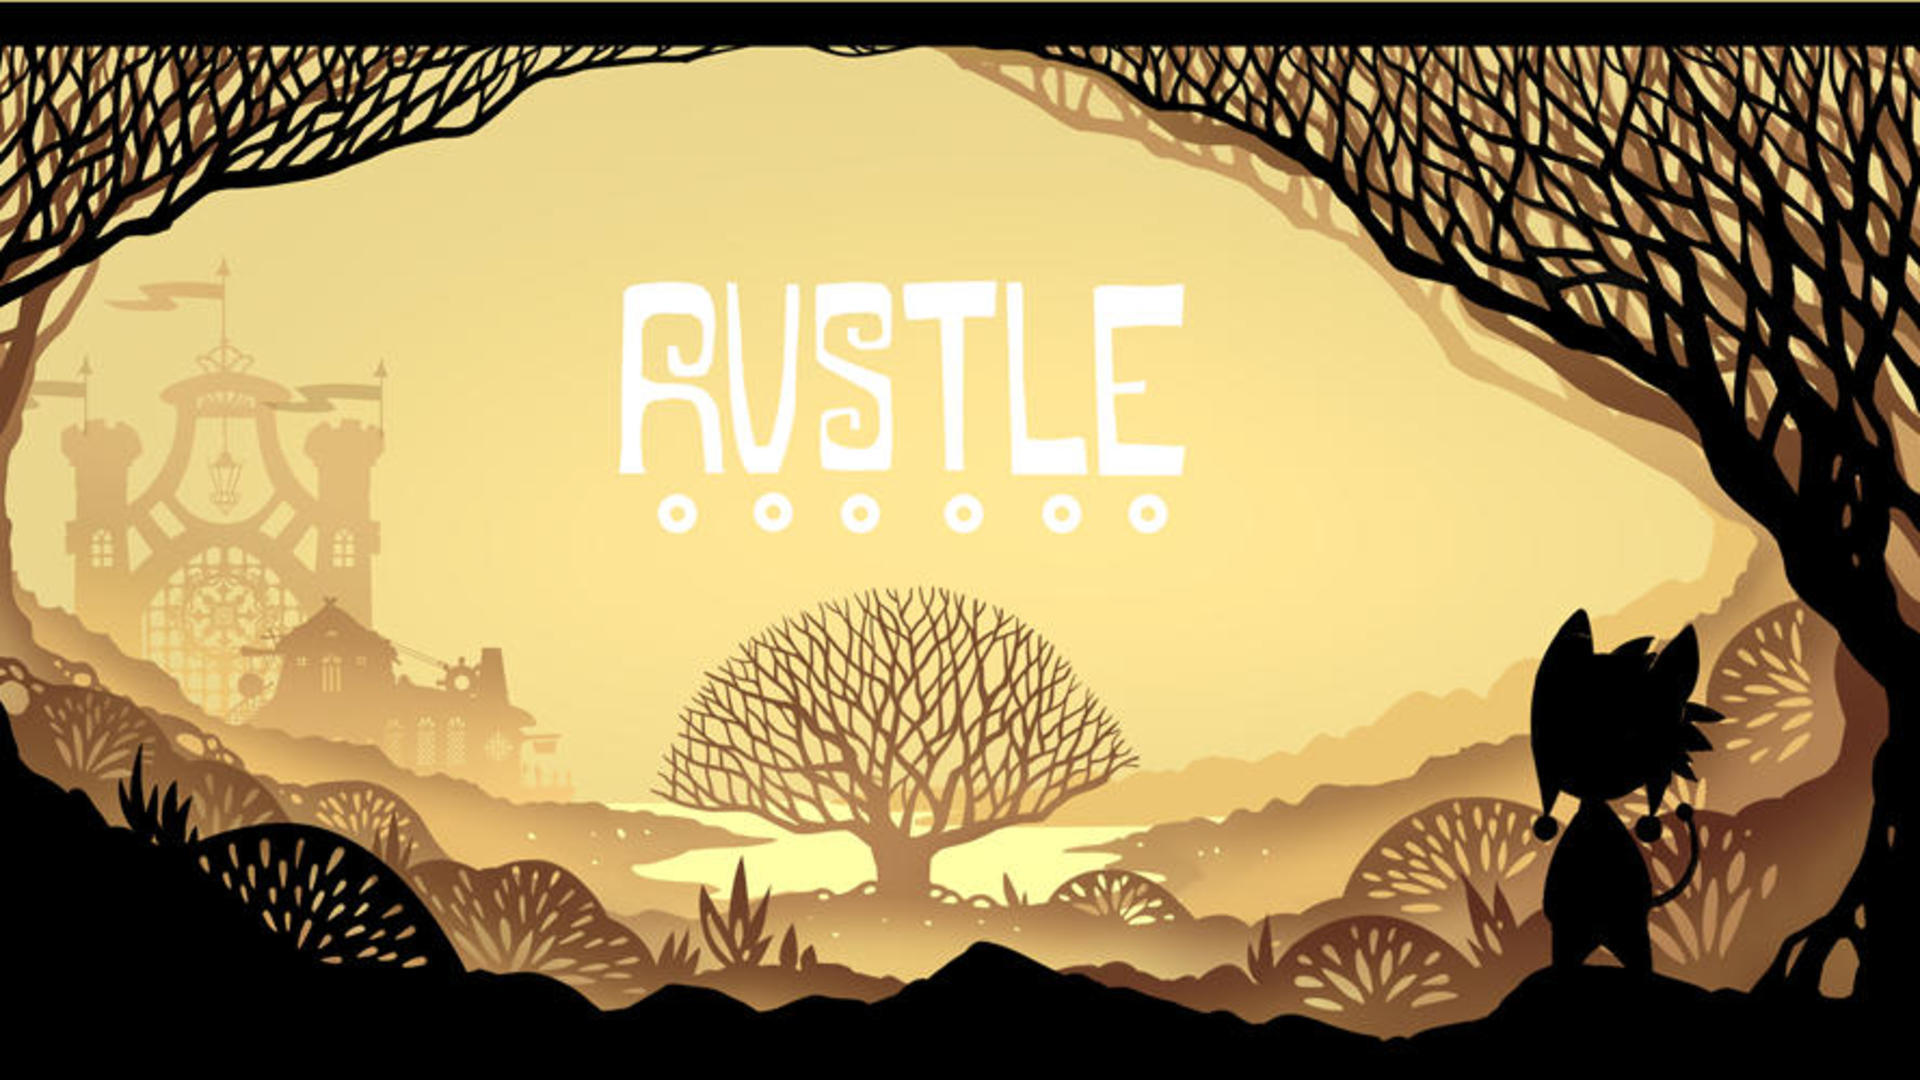 Banner of Rustle 